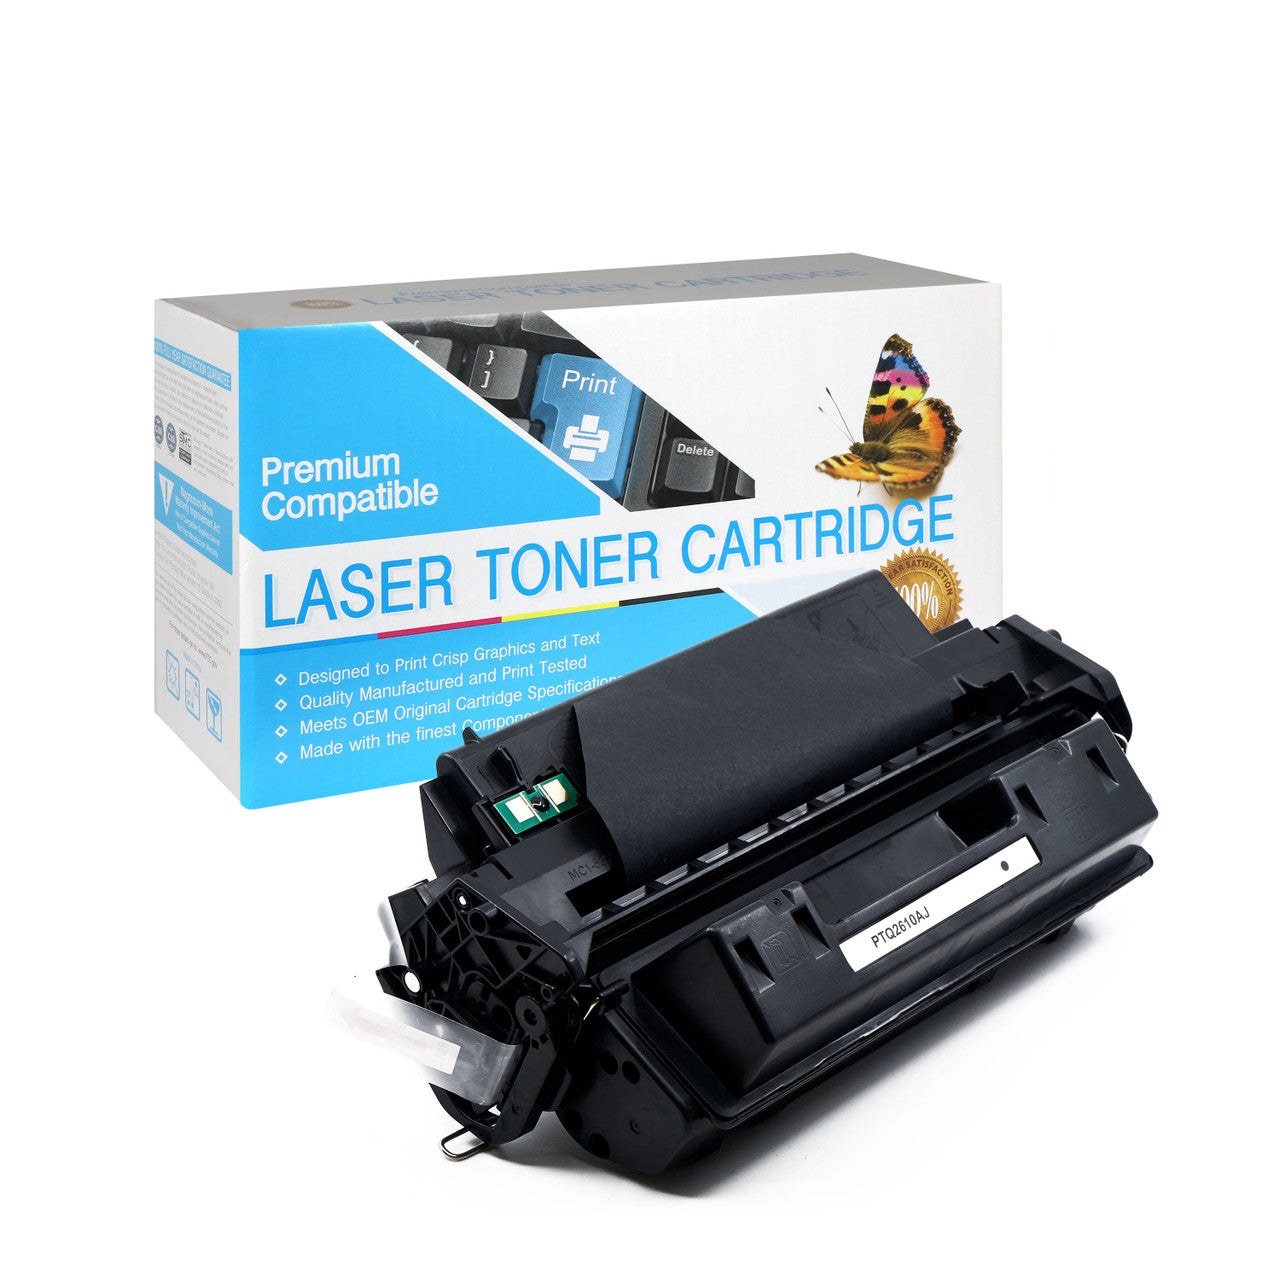 Compatible HP Q2610A Toner Cartridge (Black, Jumbo) by SuppliesOutlet